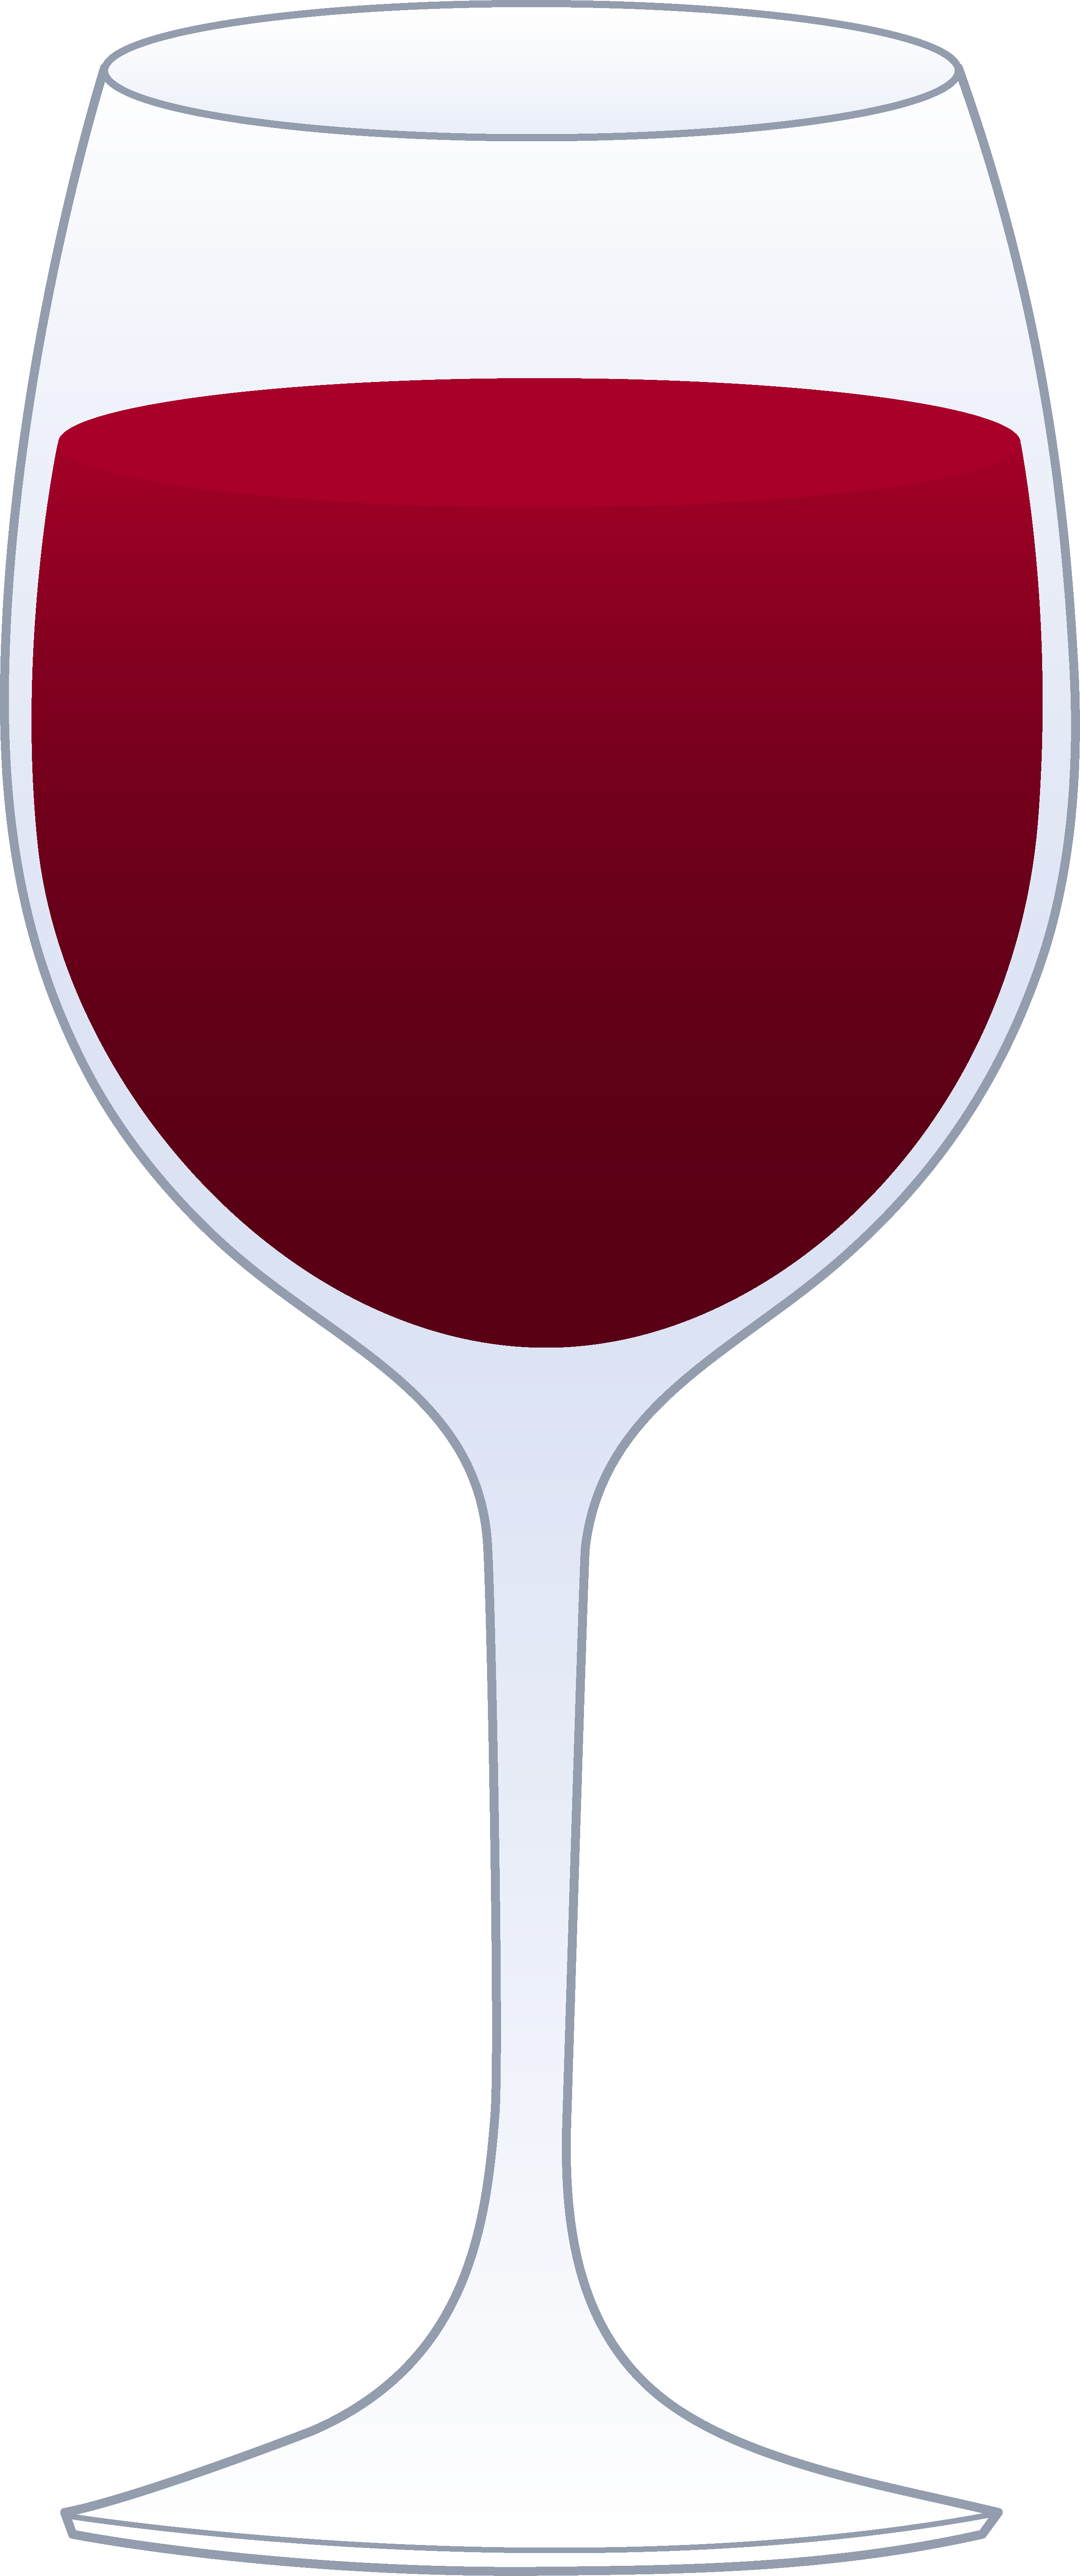 Free Wine Clip Art Image - Wine Glass Clipart